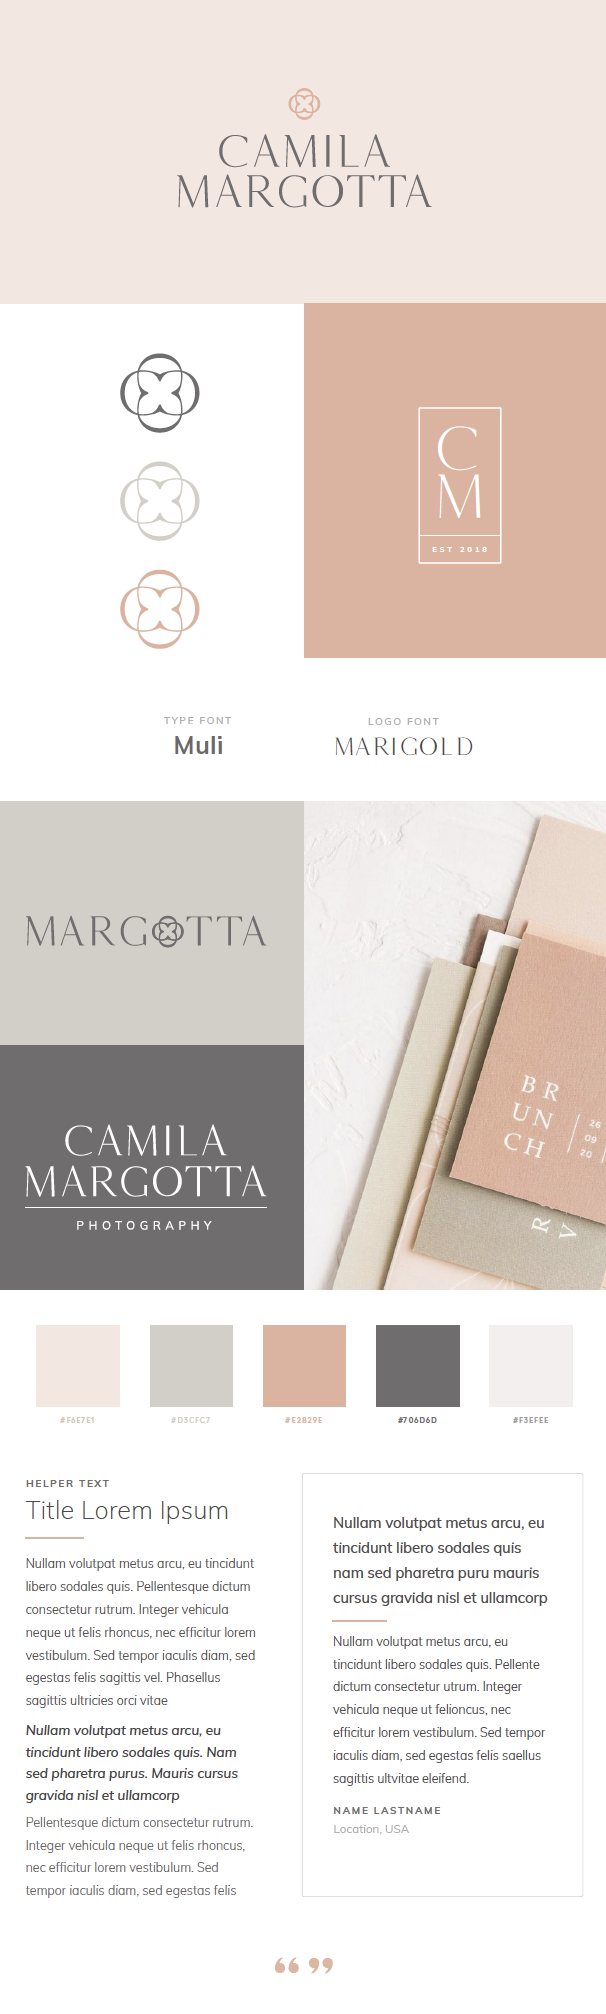 Camila Margotta Brand and Website Design